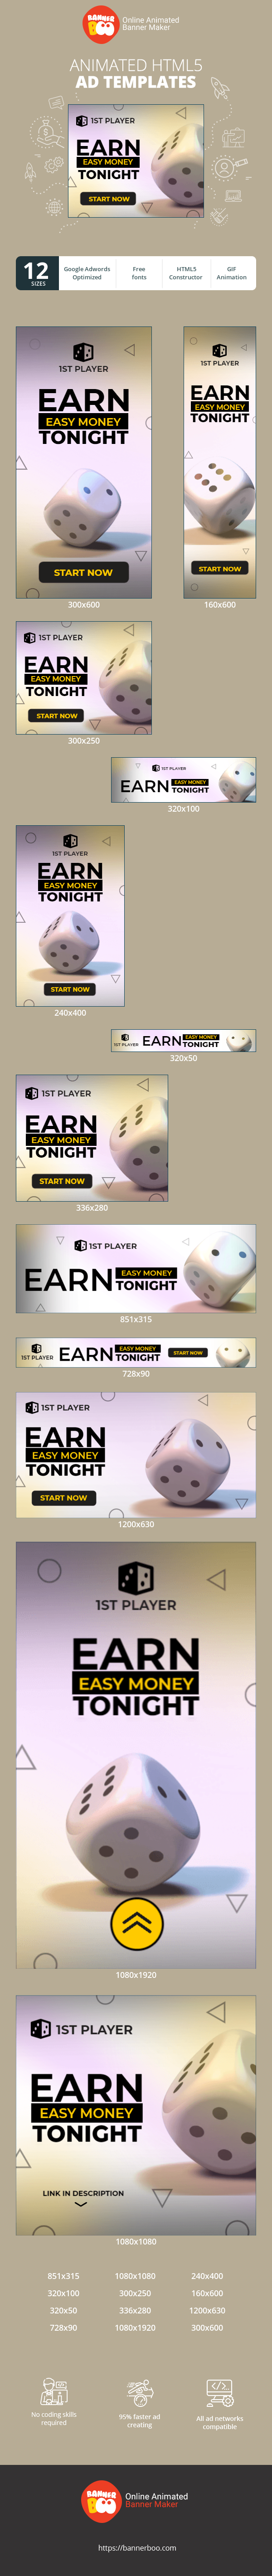 Banner ad template — Earn Easy Money Tonight — Gambling